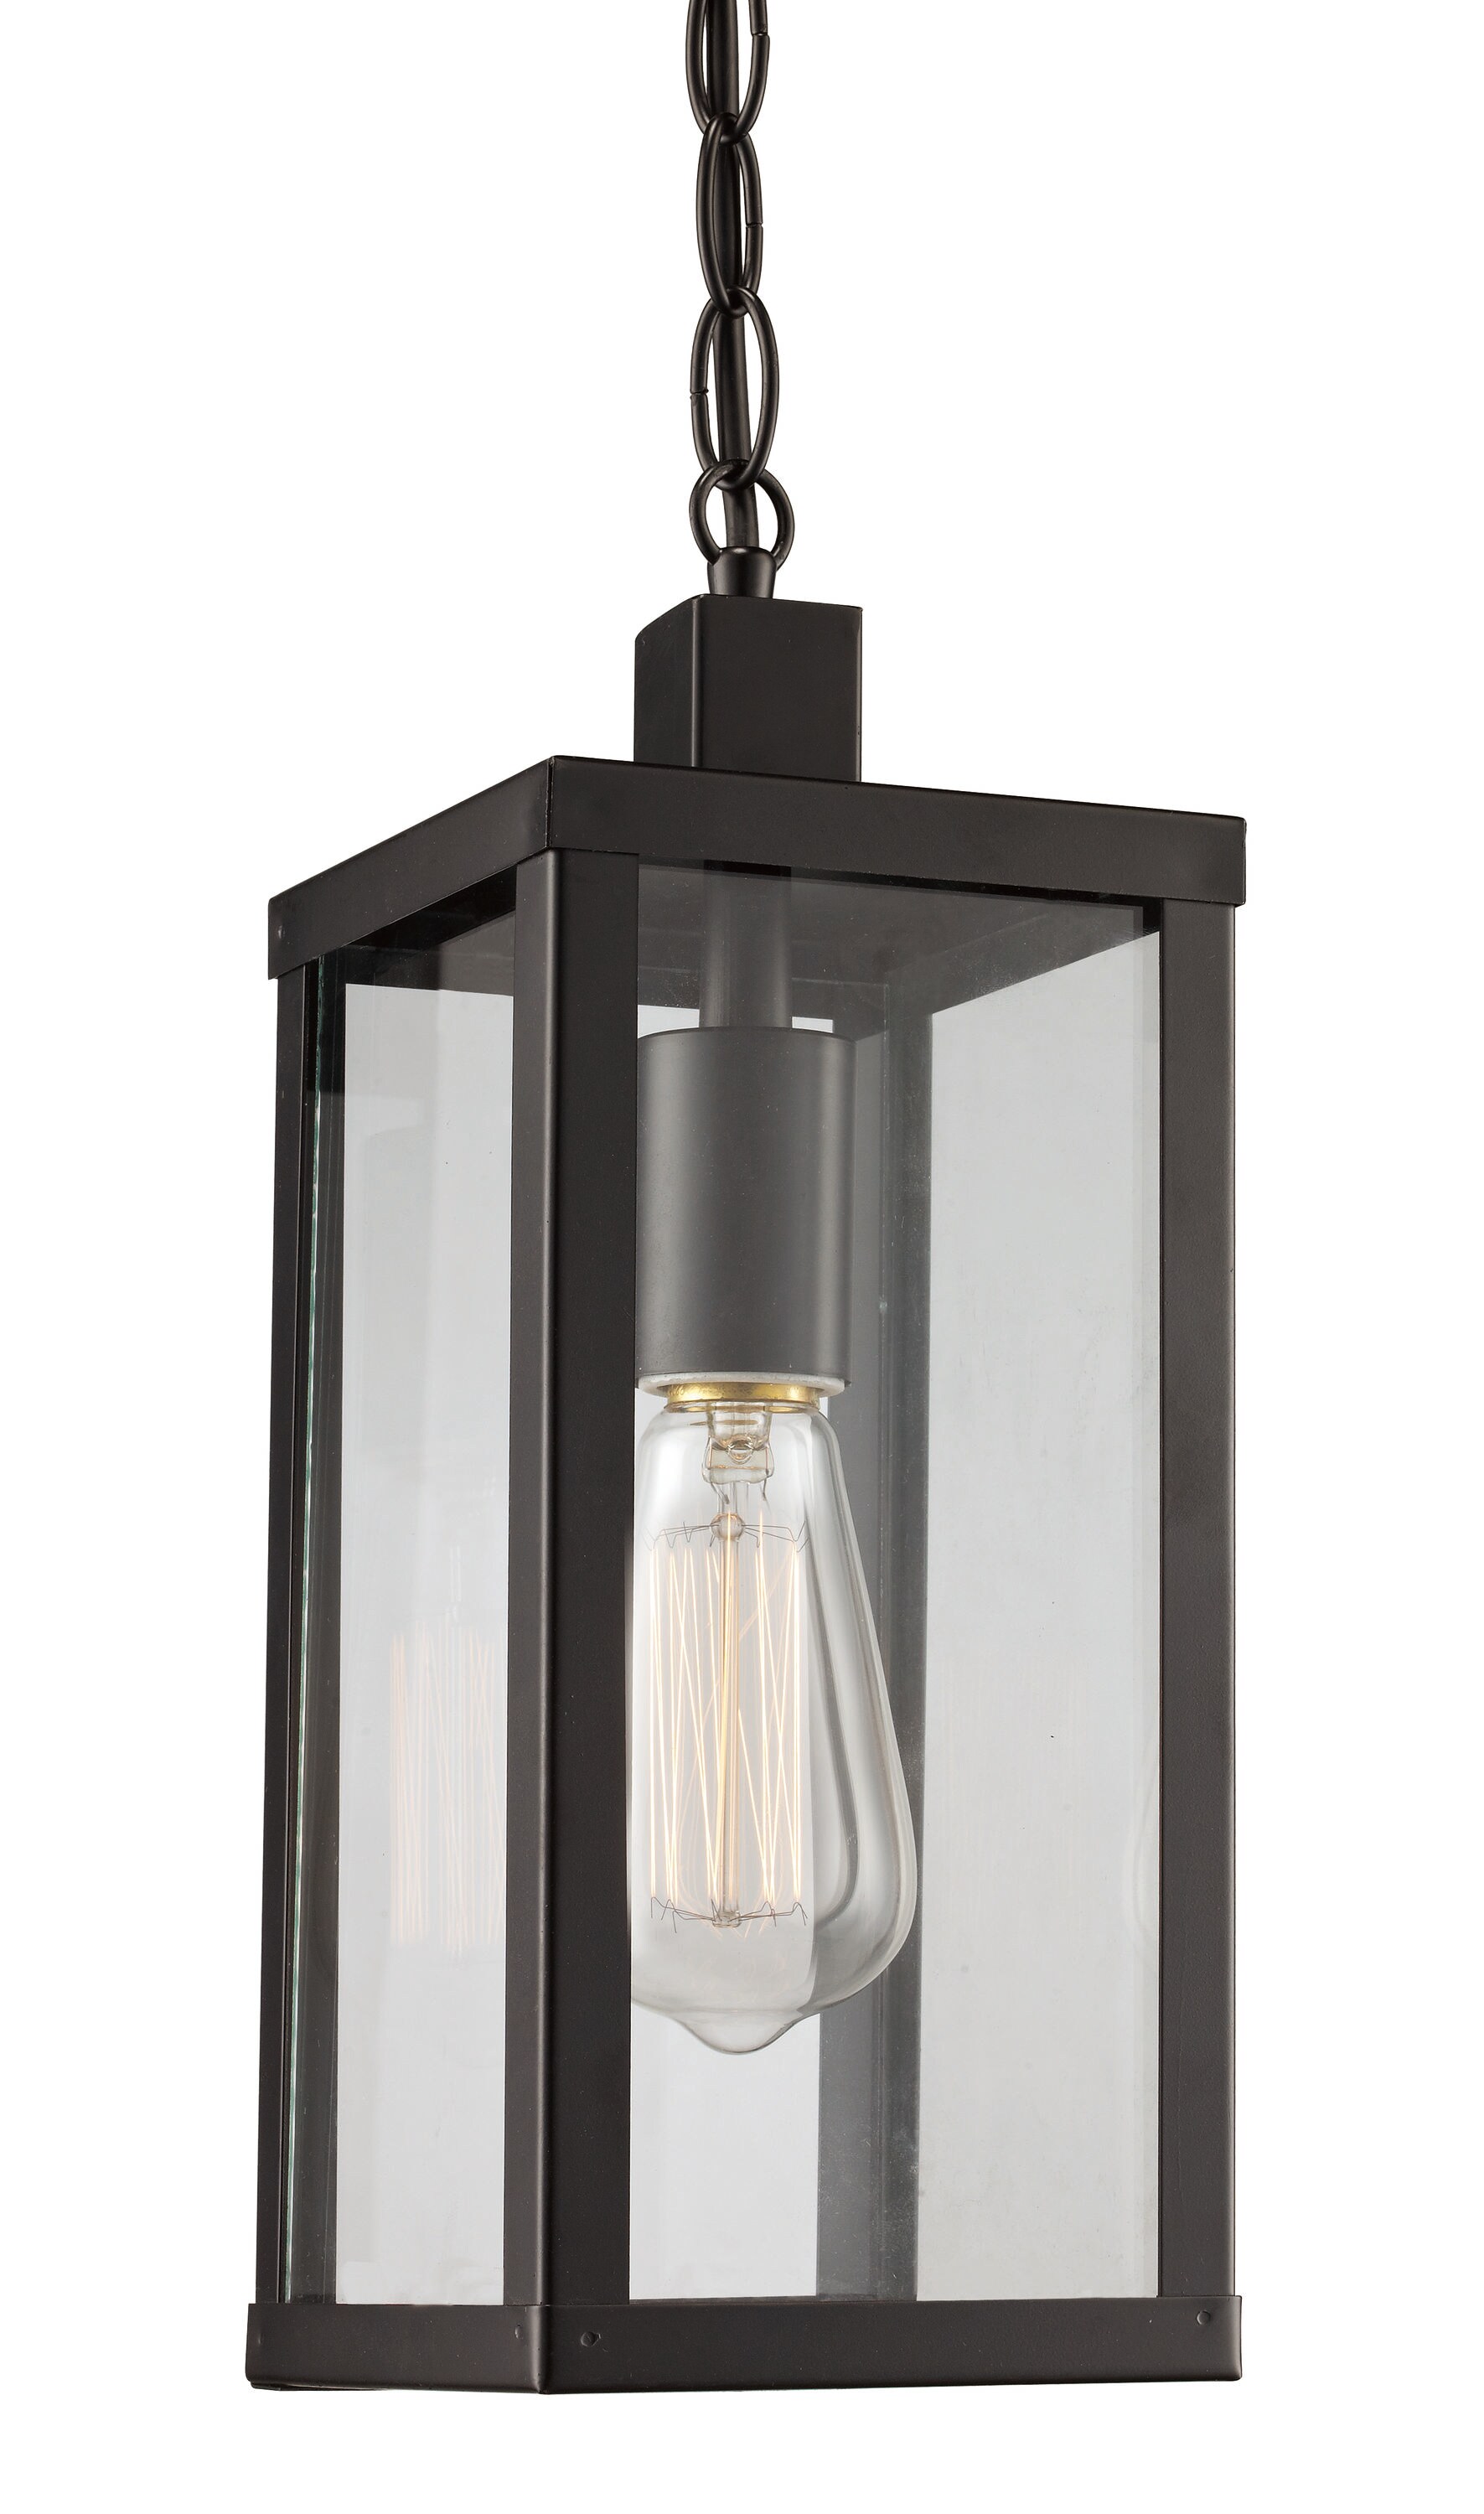 19.5, Trans Globe Lighting 40757 BK Oxford Outdoor Black Industrial Hanging Lantern 